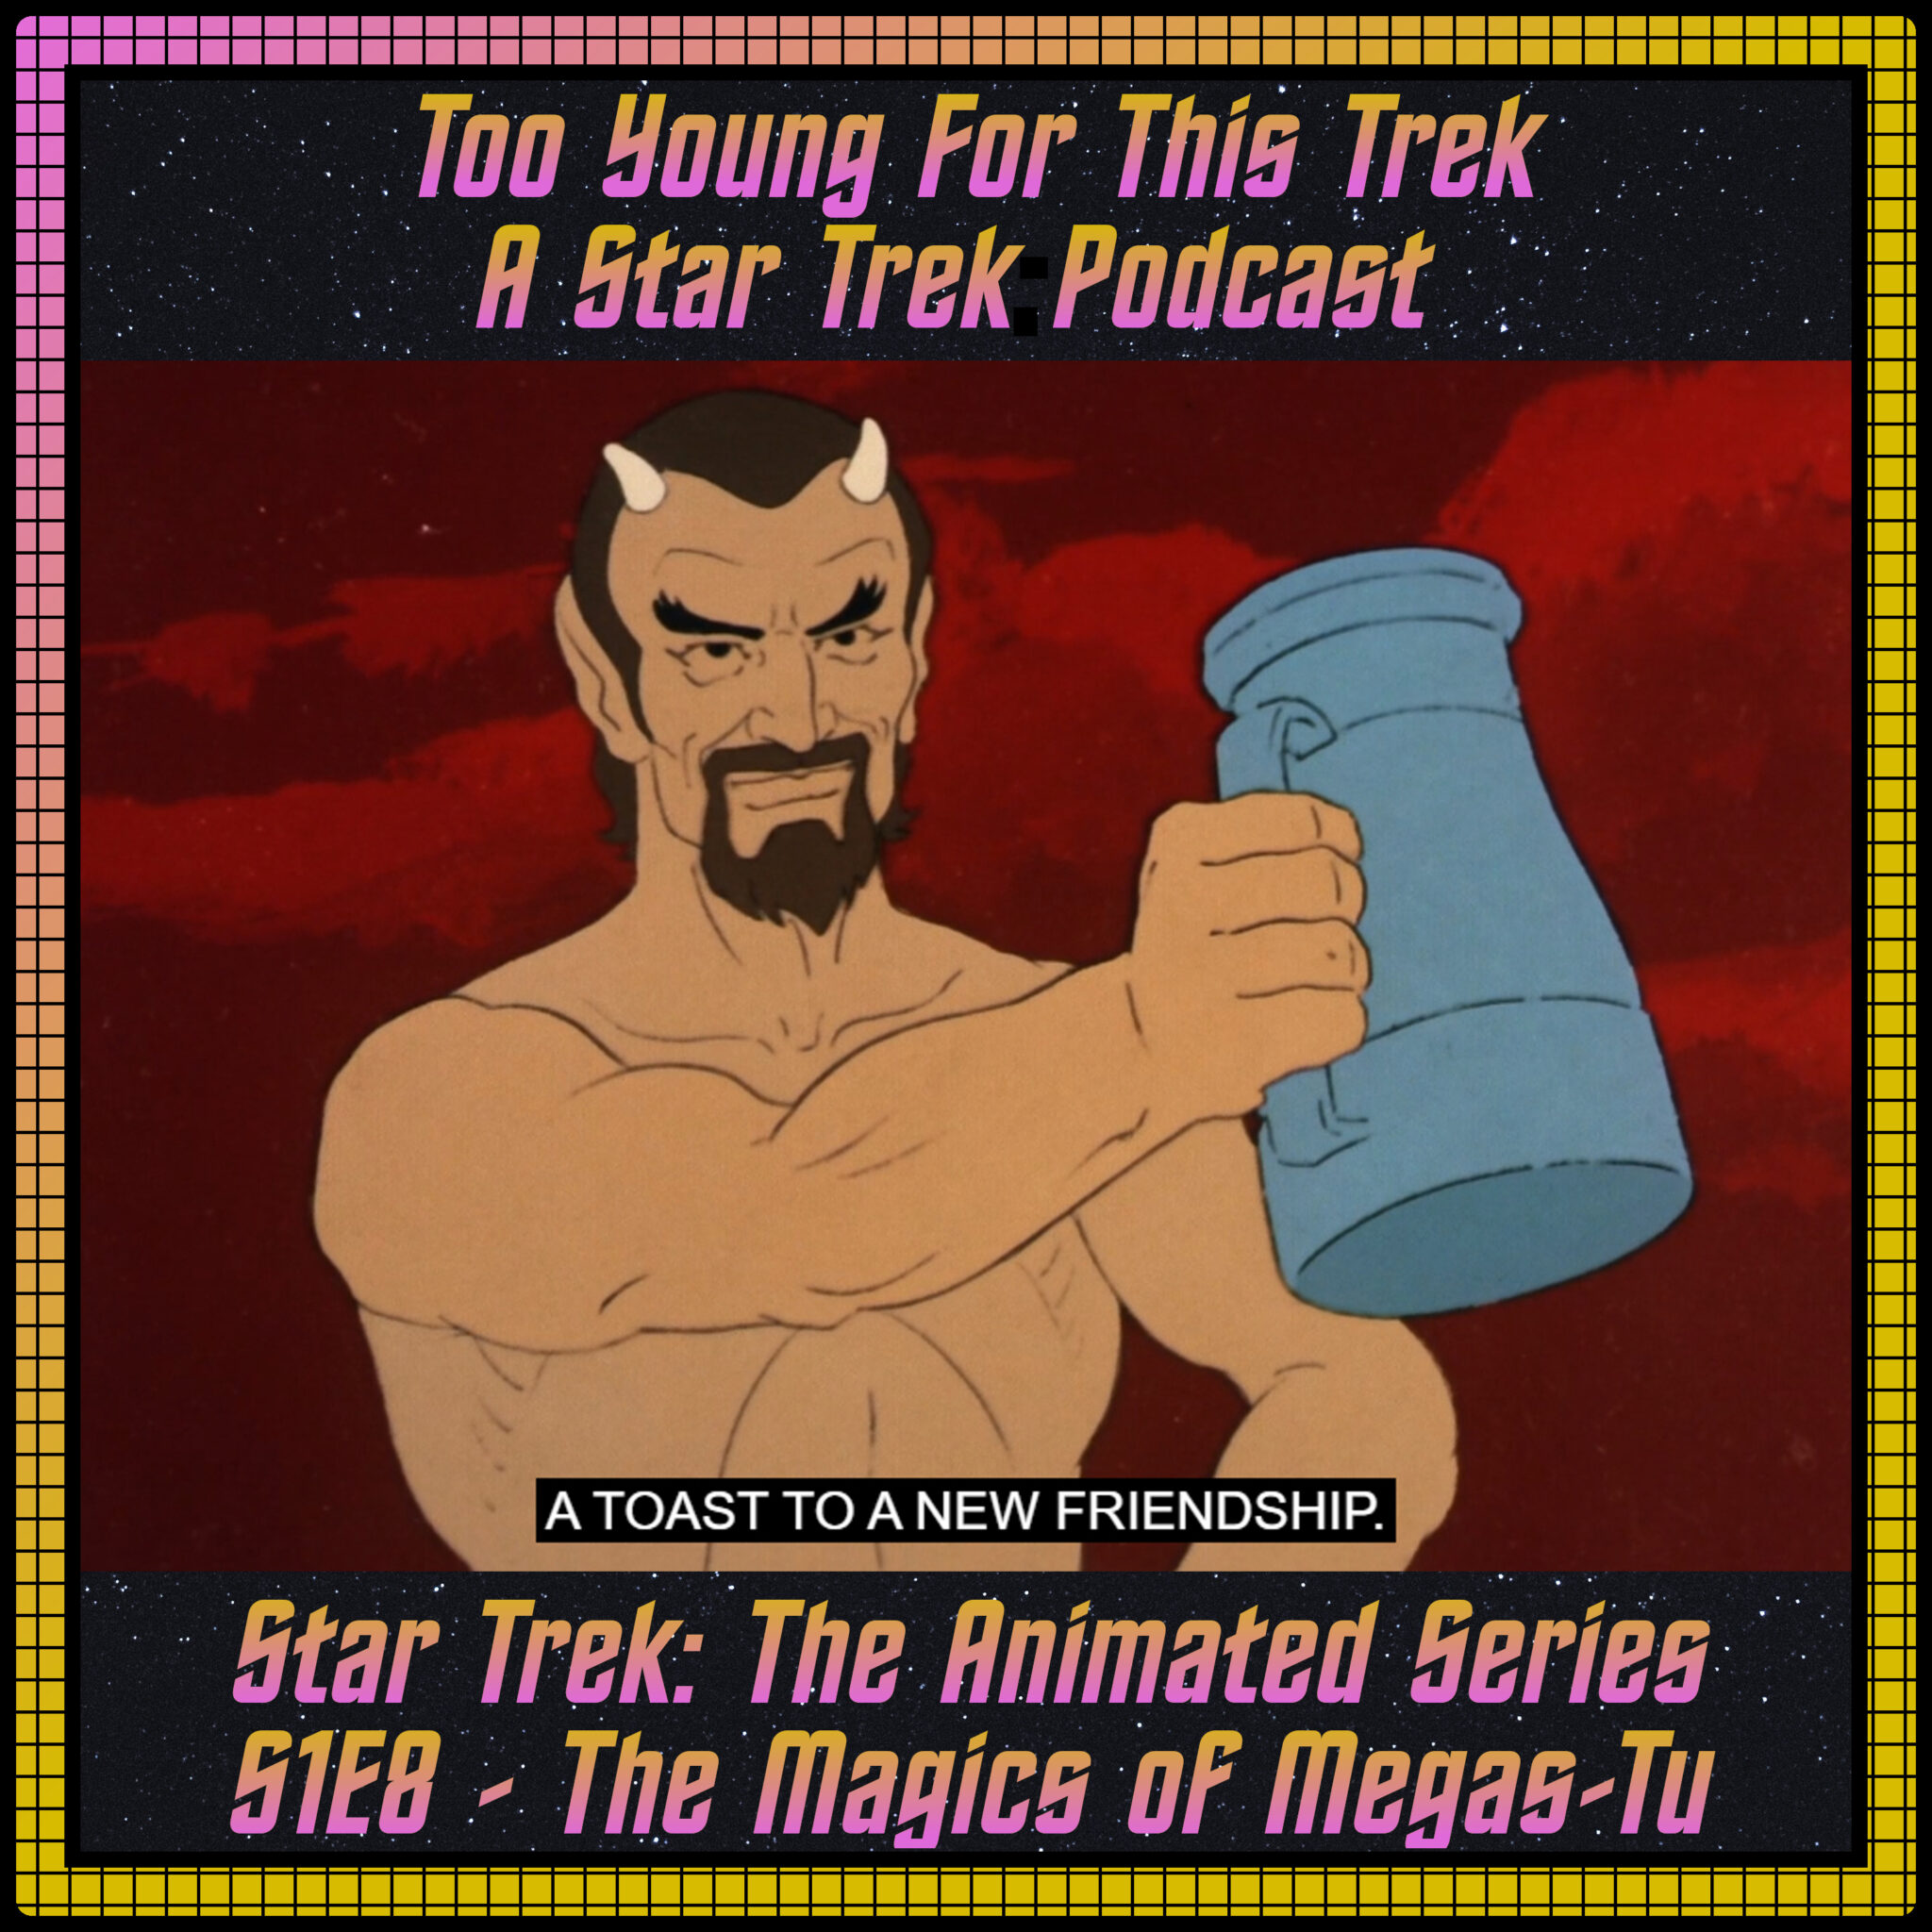 Star Trek: The Animated Series S1E8 - The Magics of Megas-Tu